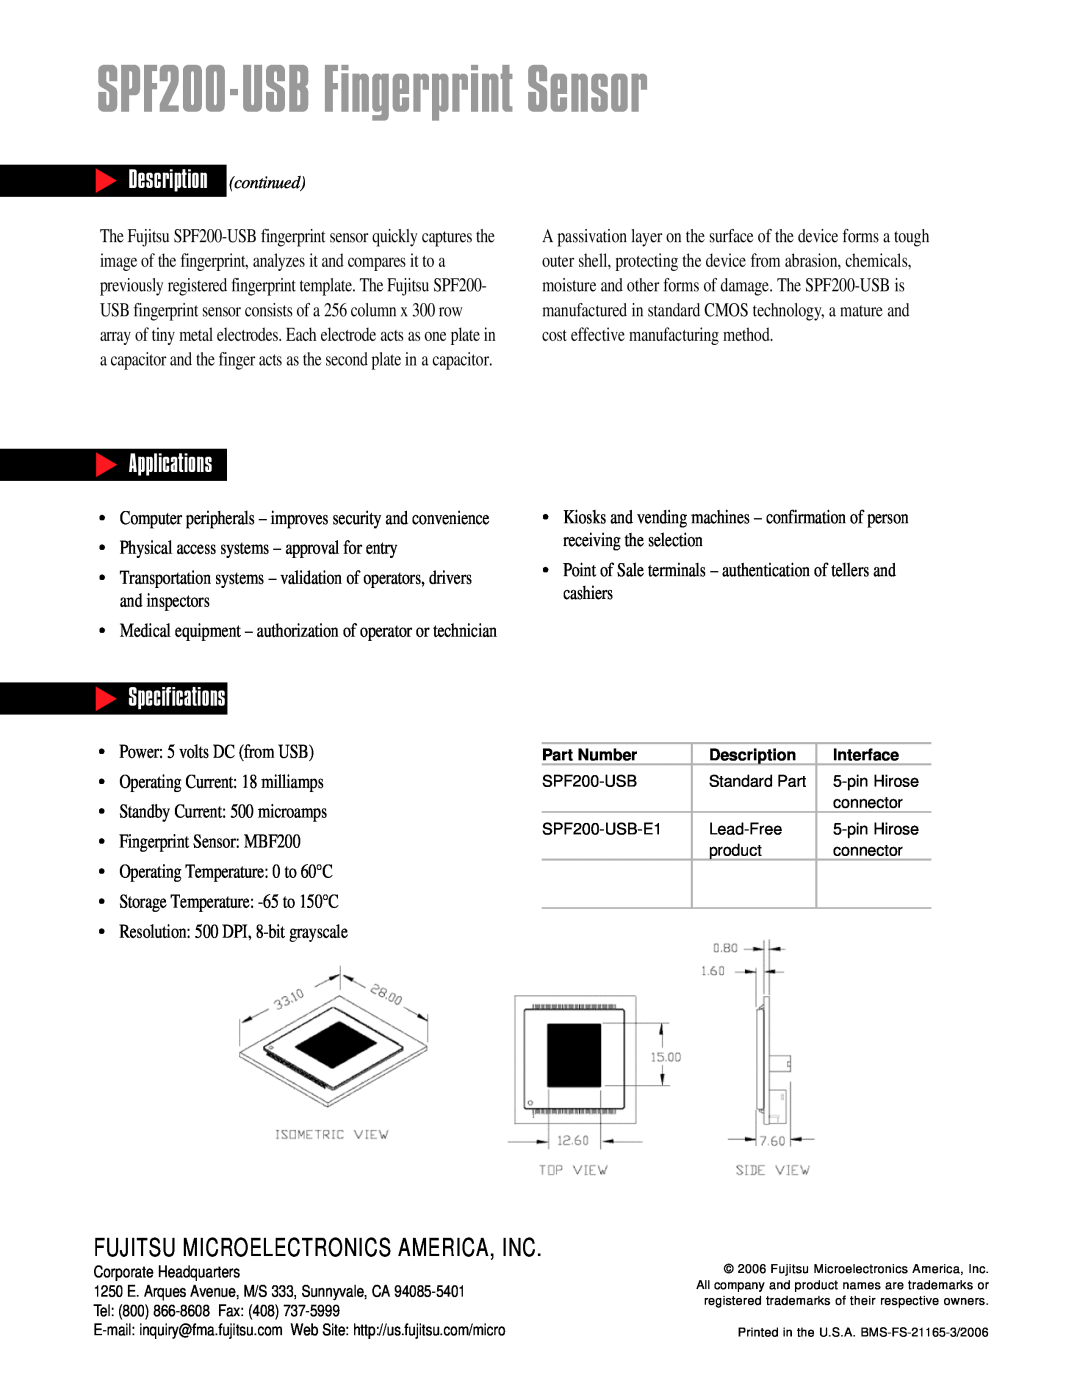 Fujitsu SPF 200 Description continued, Applications, Specifications, SPF200-USB Fingerprint Sensor, Part Number, Interface 